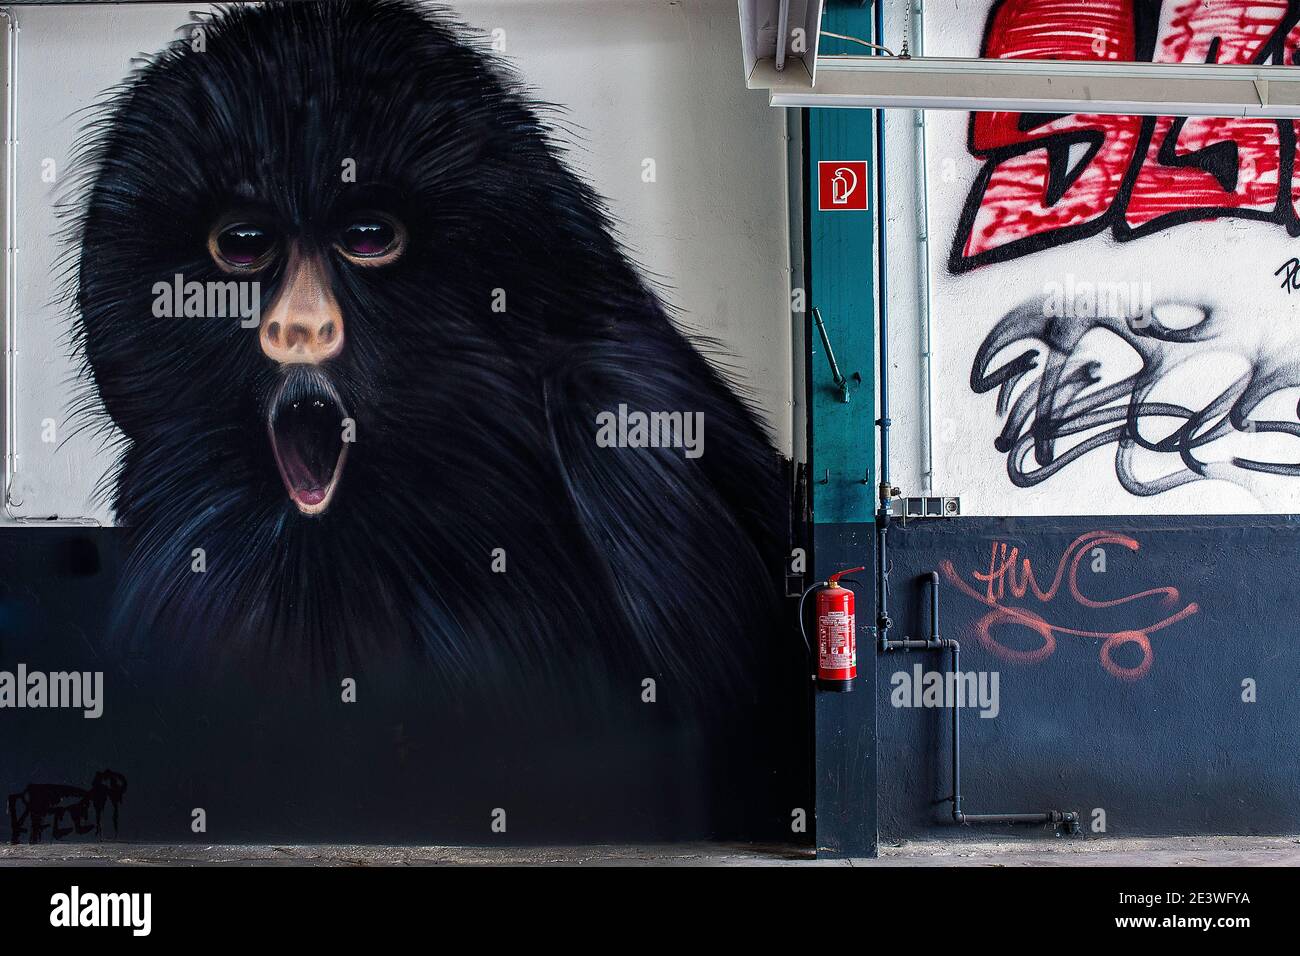 Hairy Monkey Mural Graffiti Stock Photo